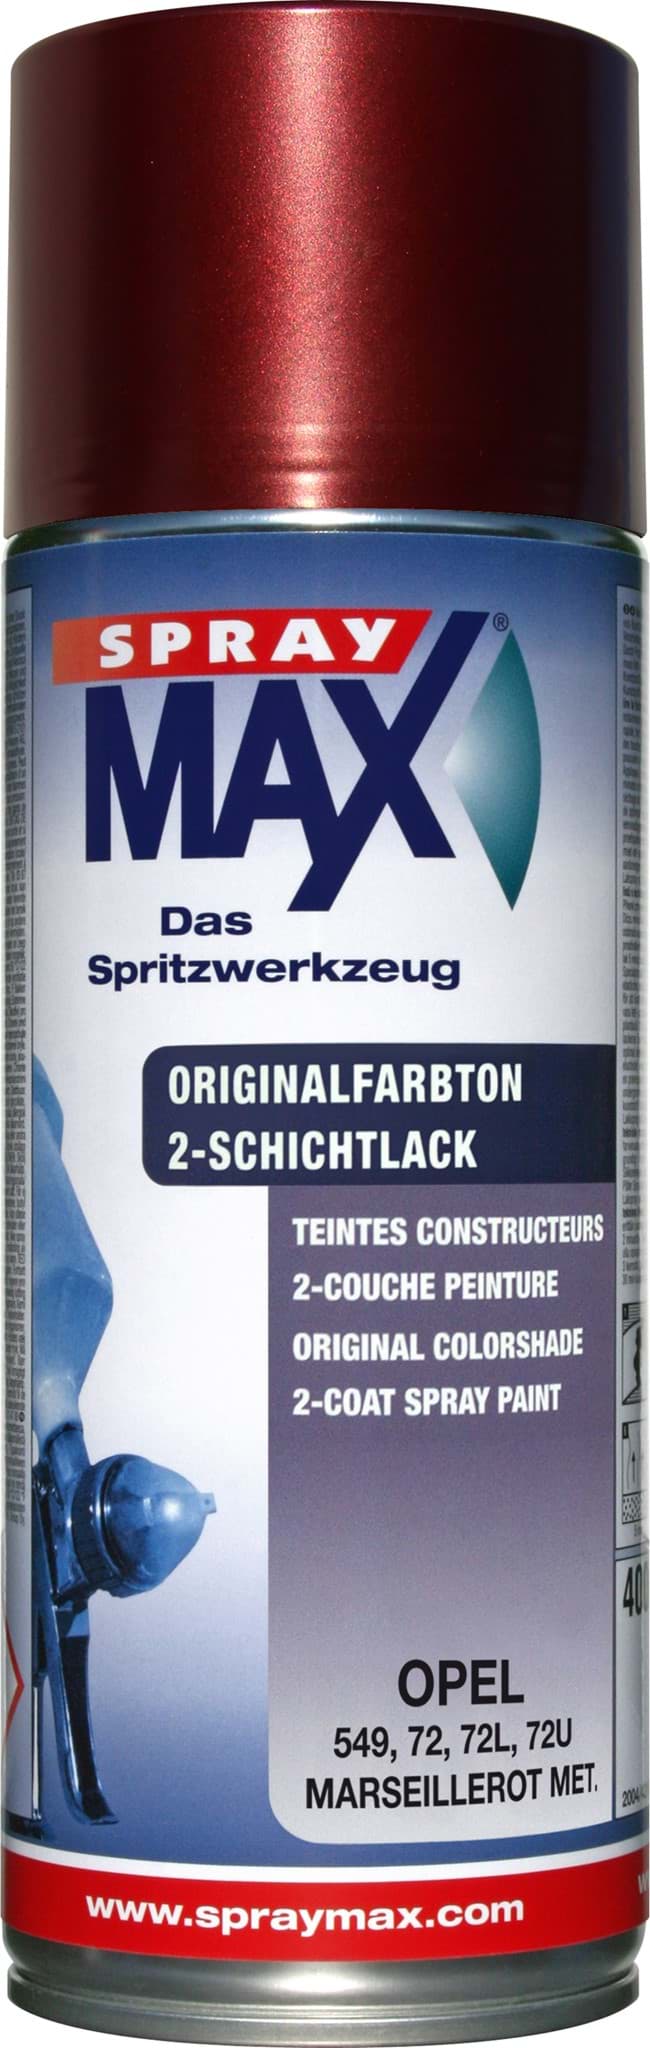 SprayMax Originalfarbton für Opel 549 marseillerot met. resmi